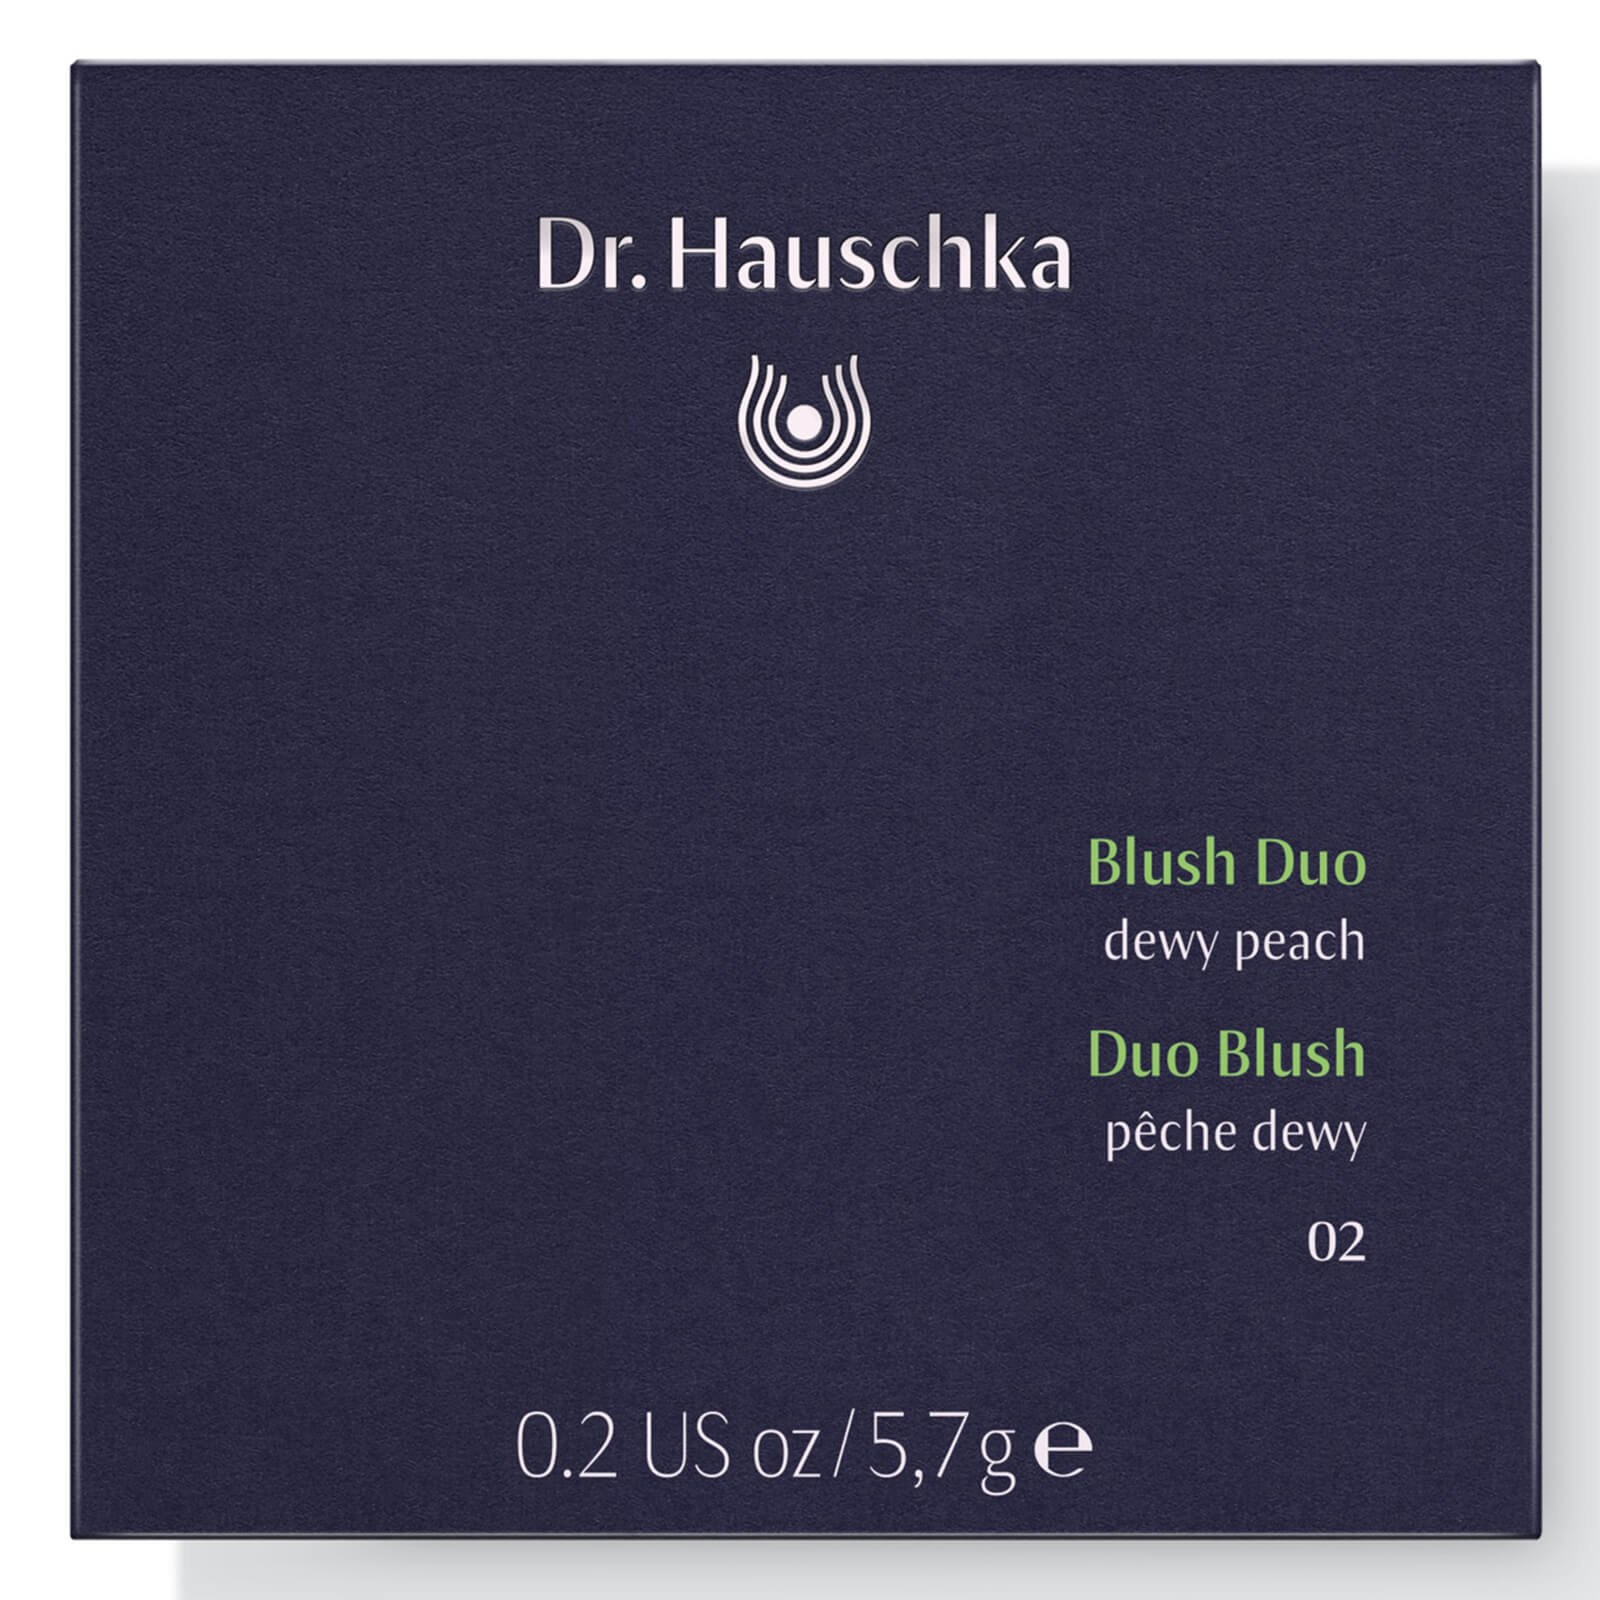 Dr. Hauschka Blush Duo